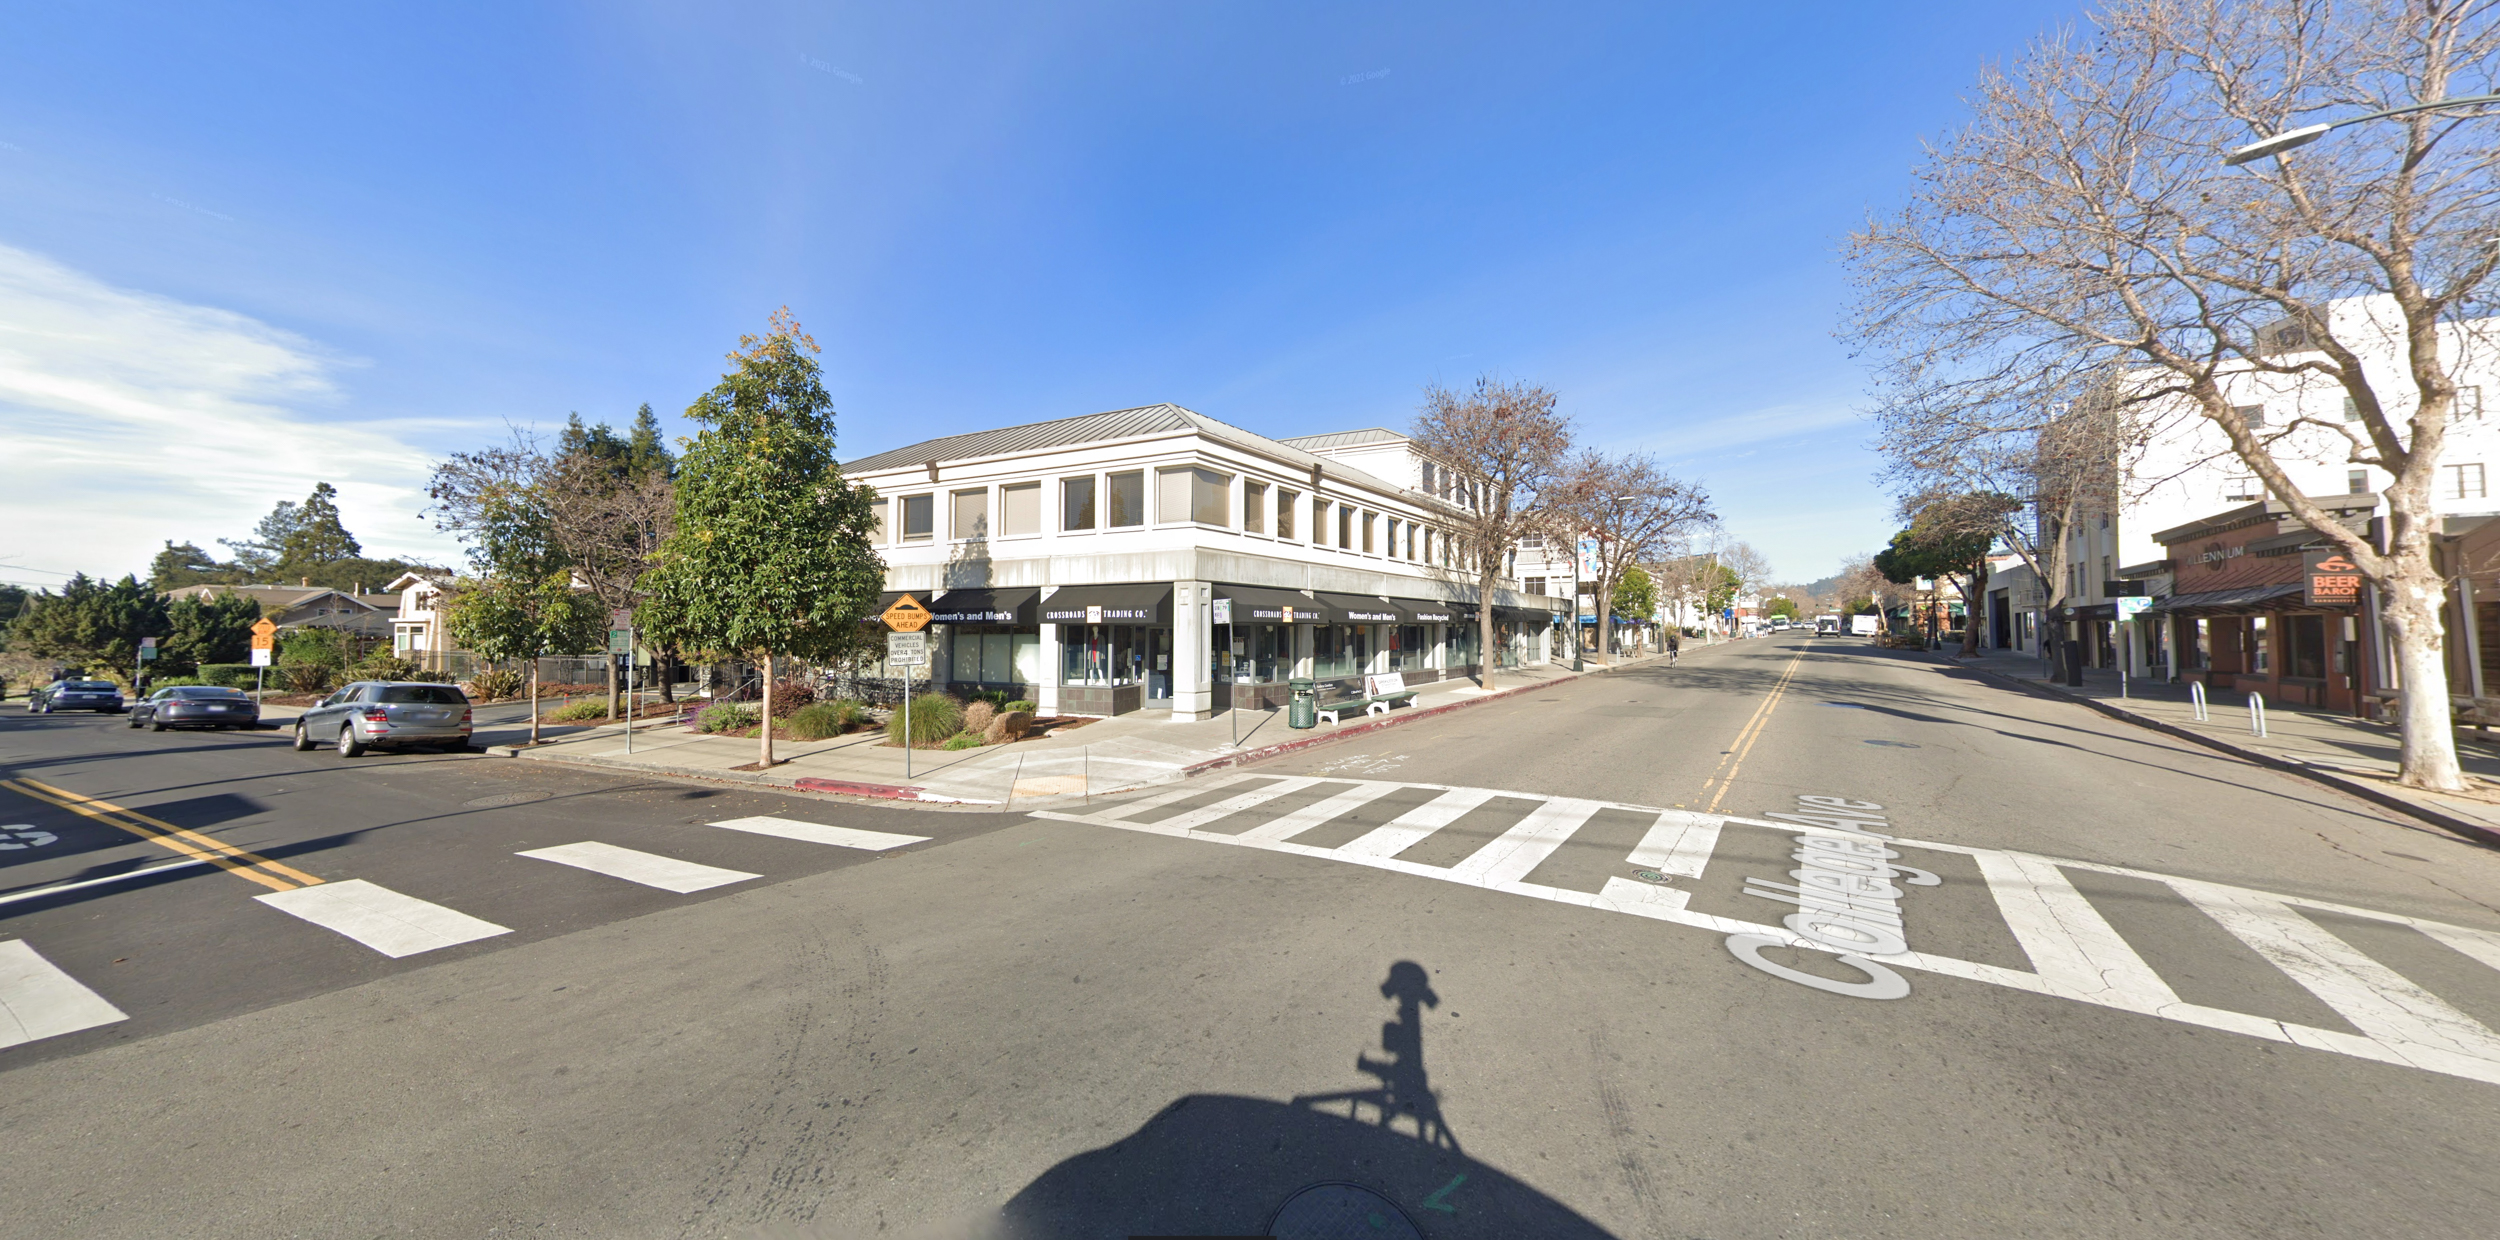 5901 College Avenue, image via Google Street View